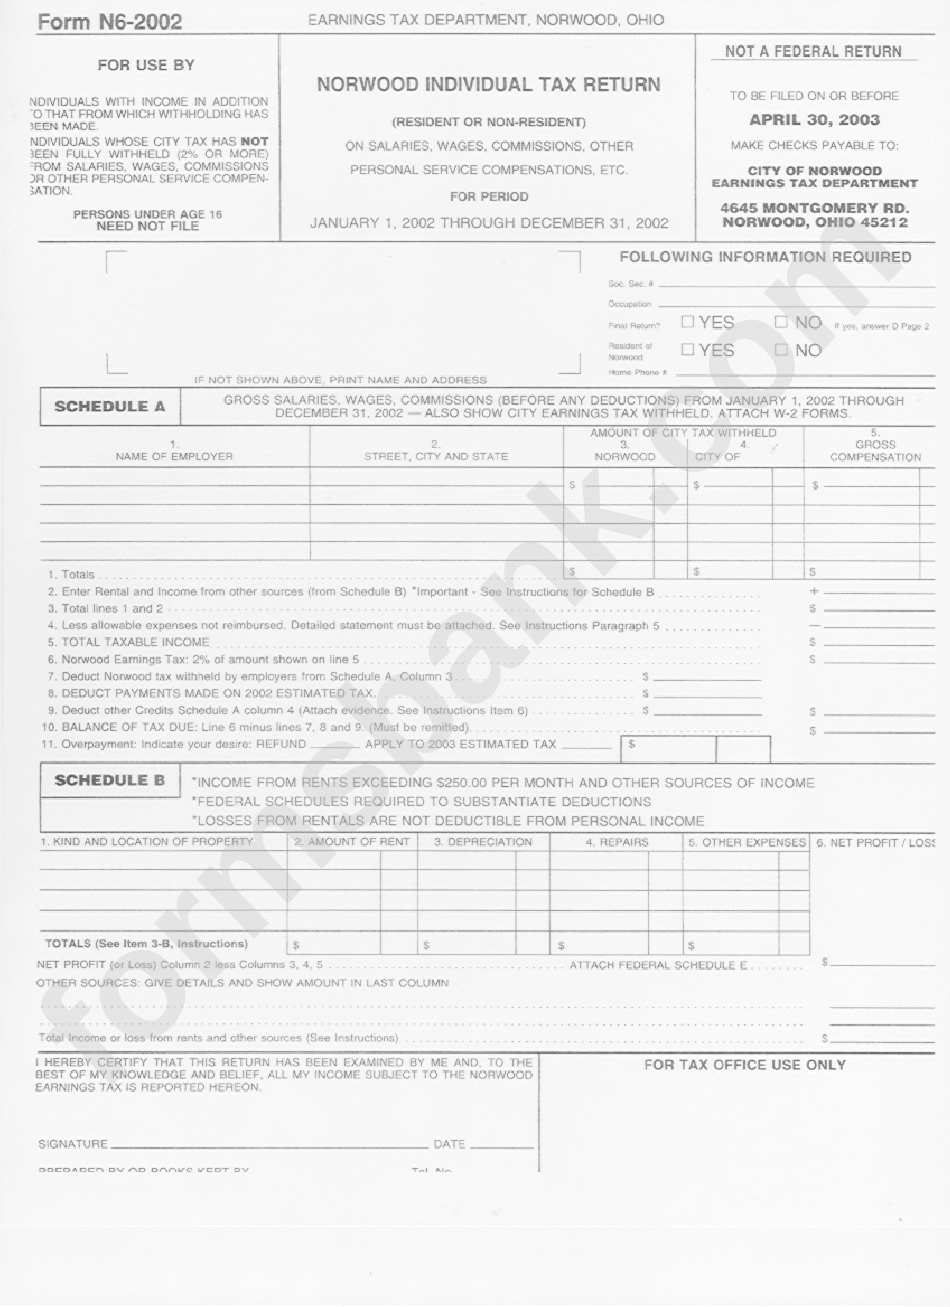 Form N6-2002 - Norwood Individual Tax Return